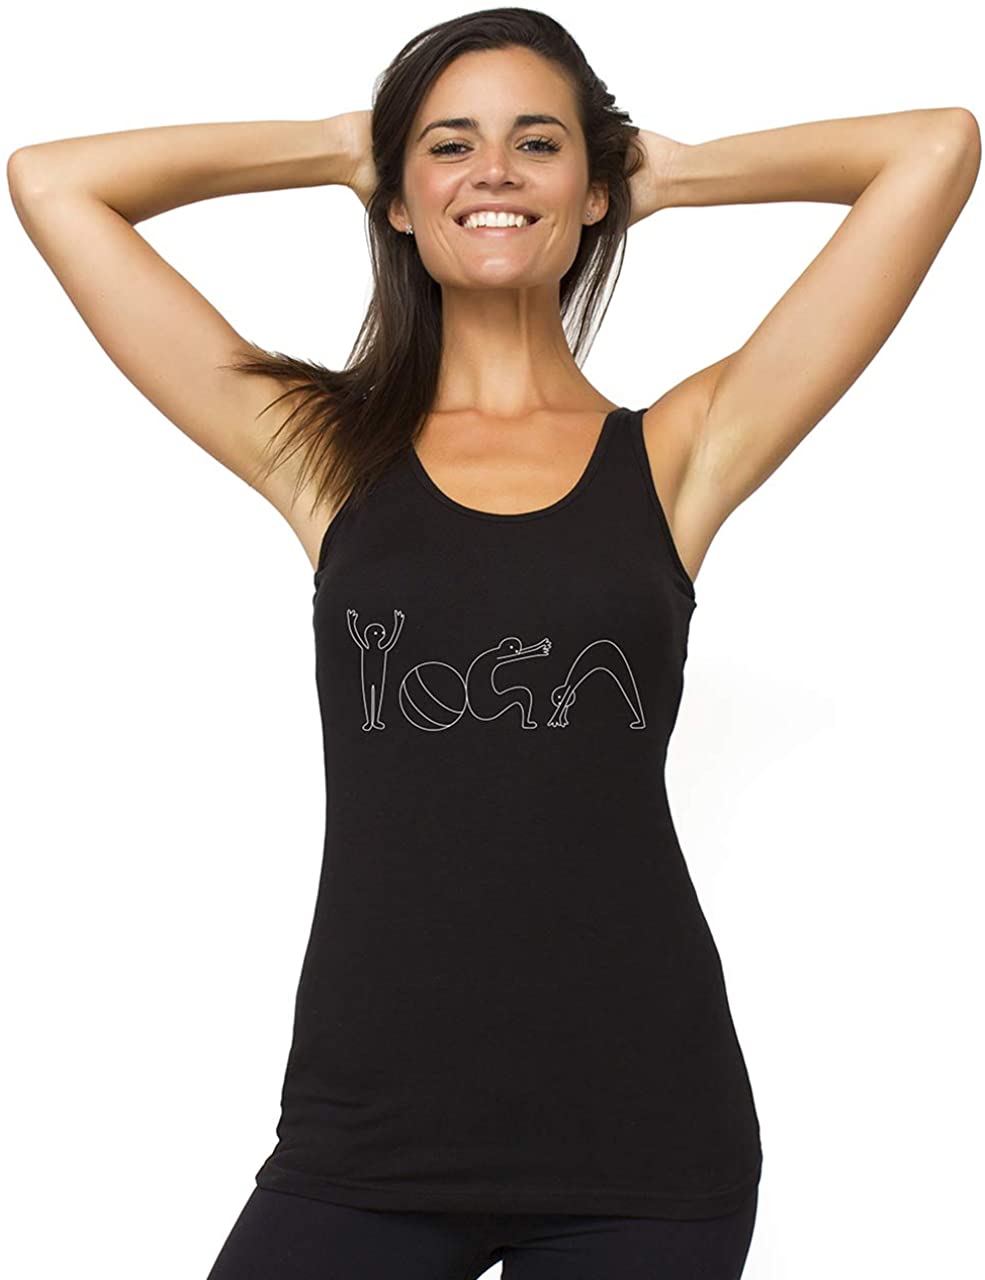 TREELANCE Organic Cotton Yoga Workout Tank Top Moon Phases Shirts